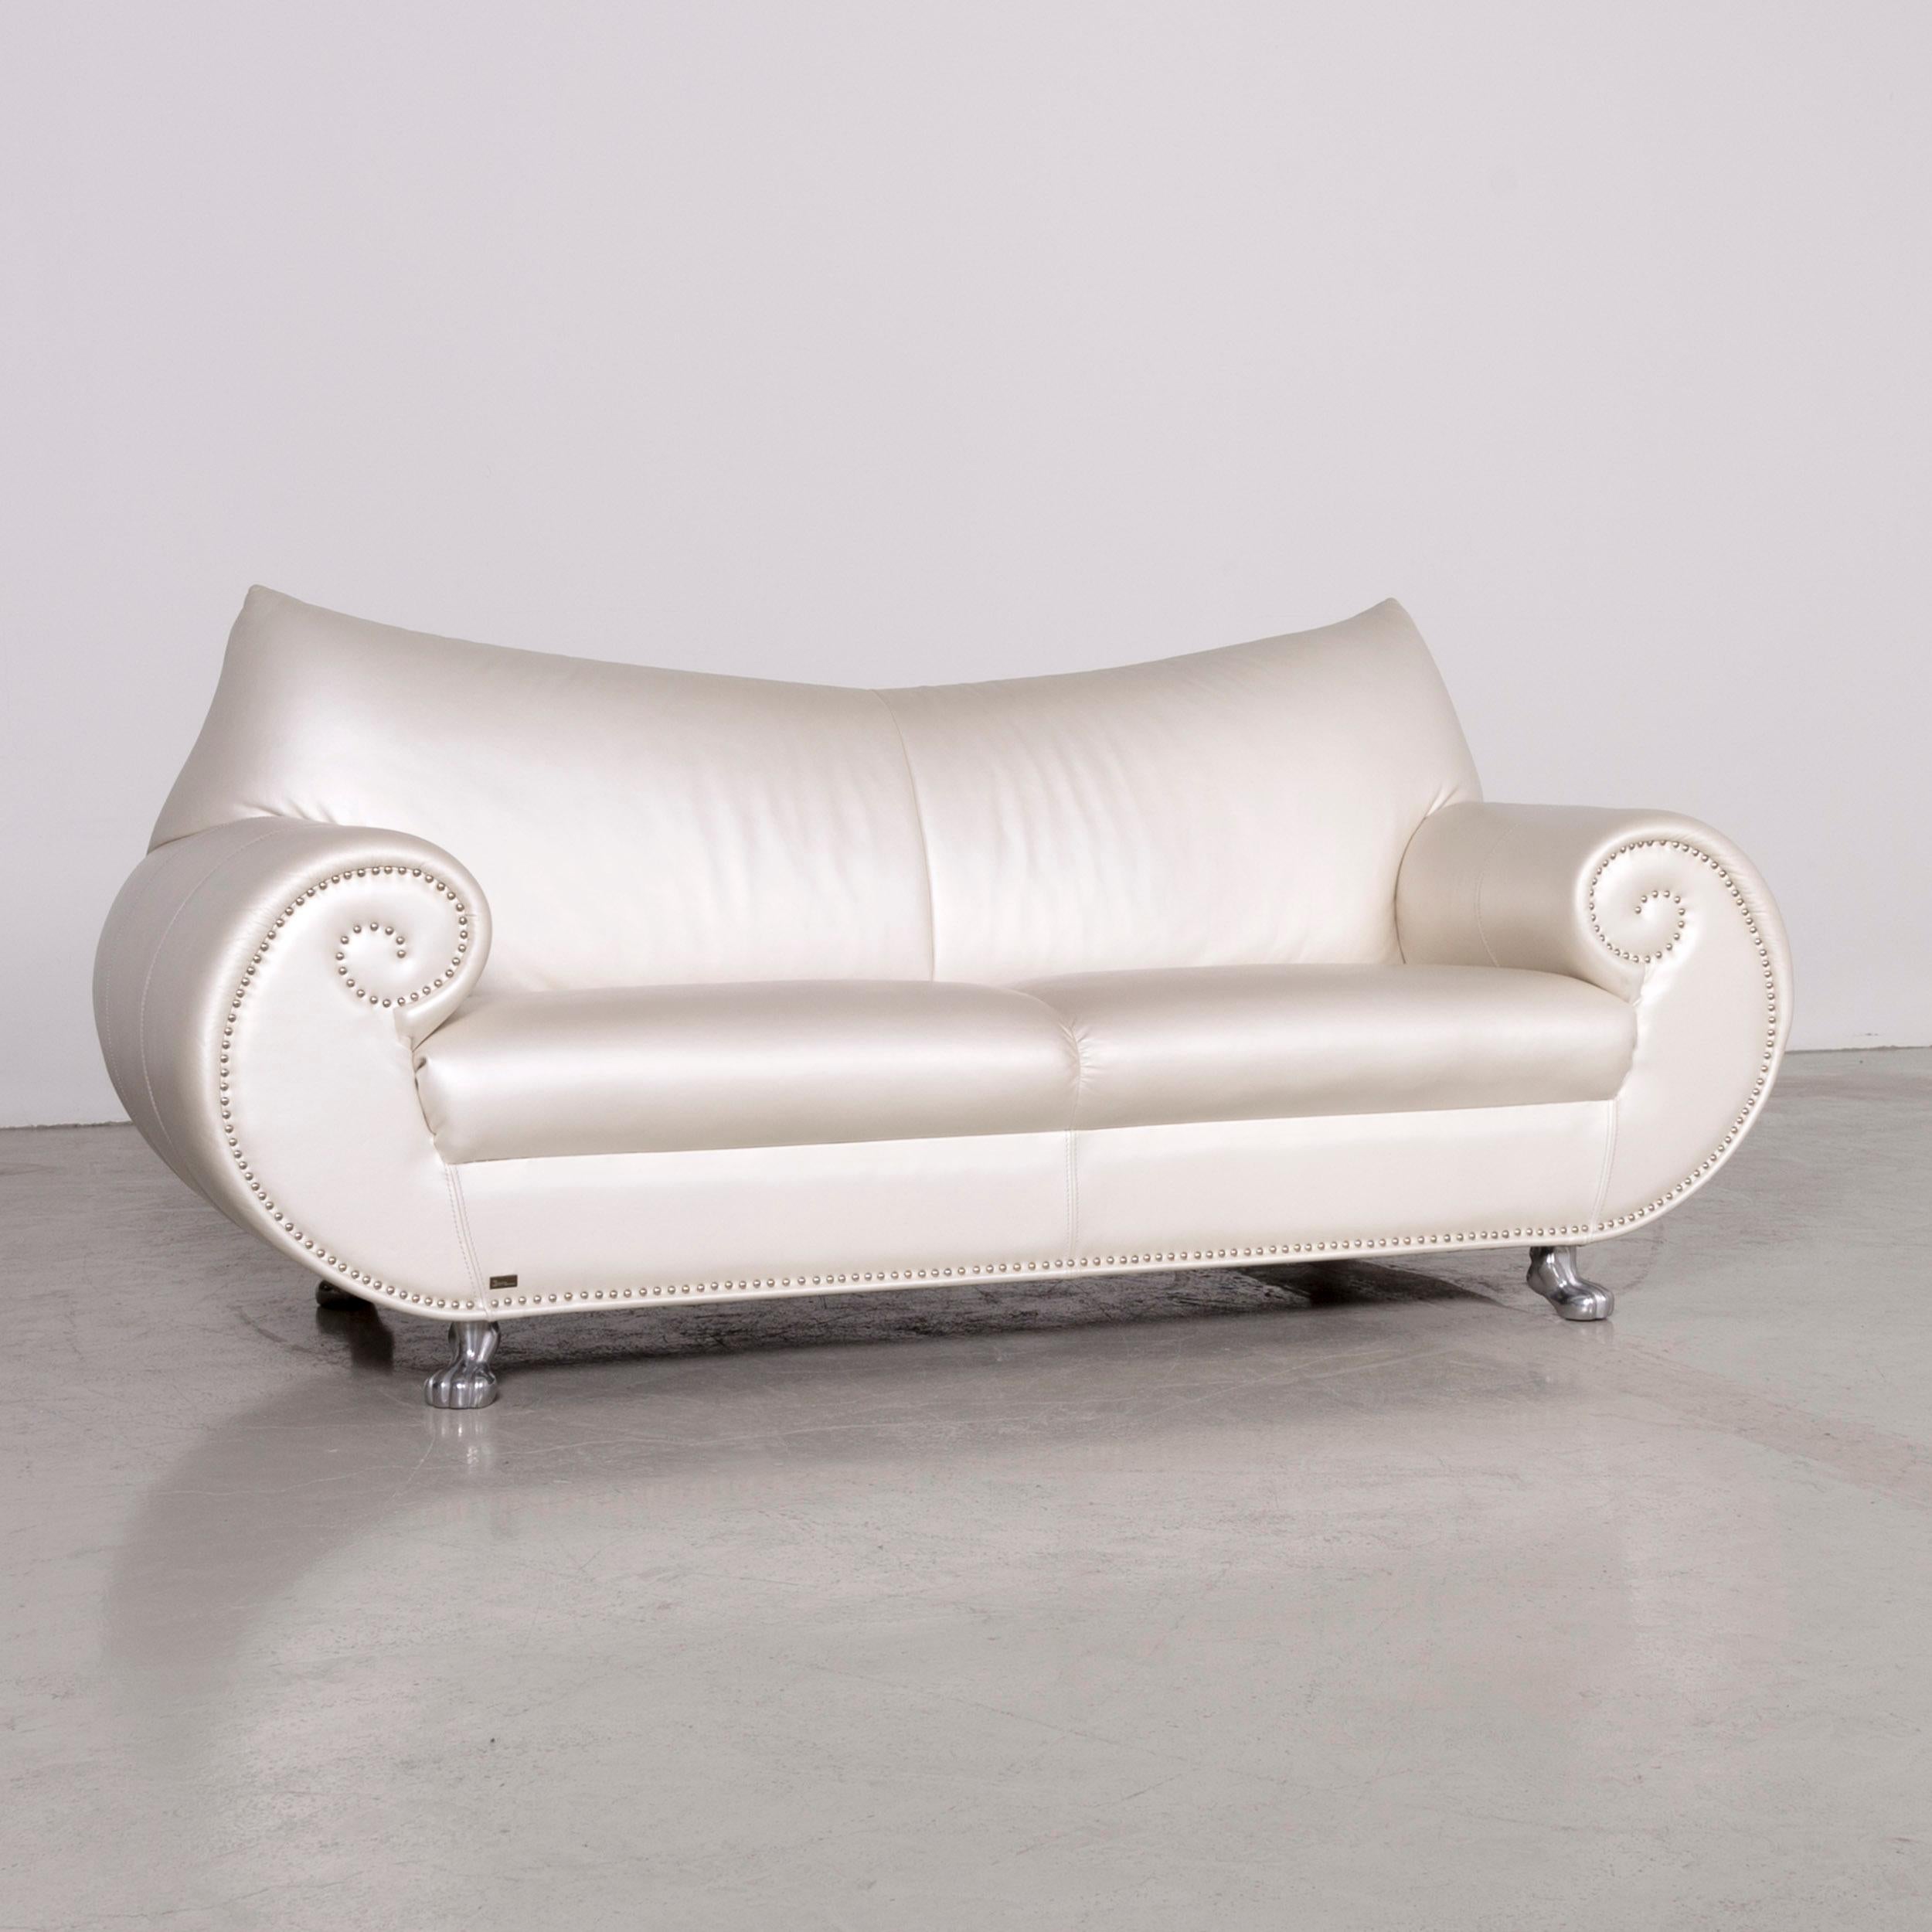 Bretz Gaudi designer leather sofa white two-seat couch.